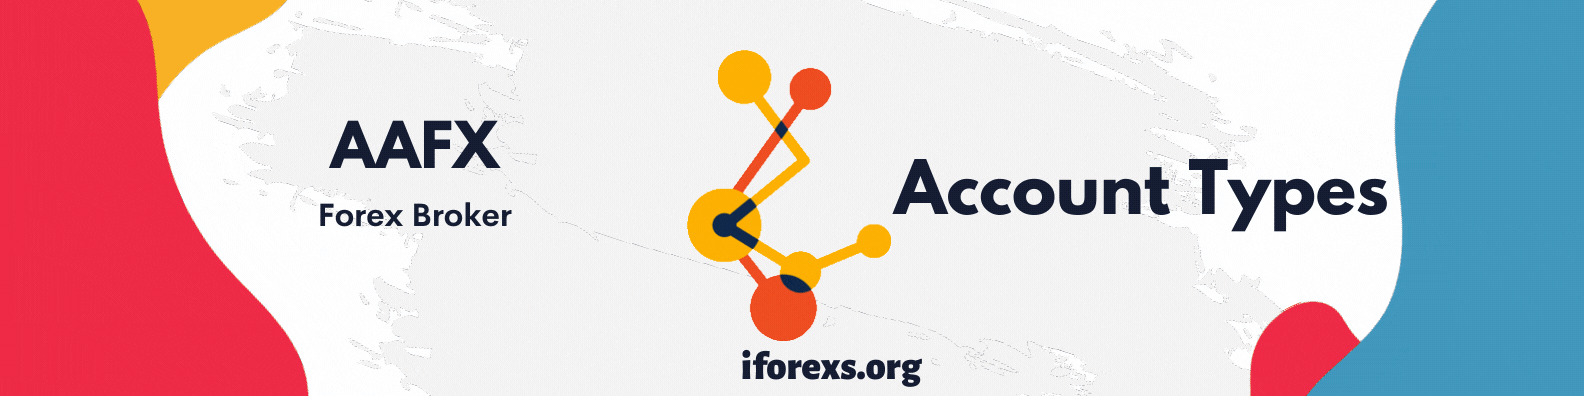 AAFX Account Types